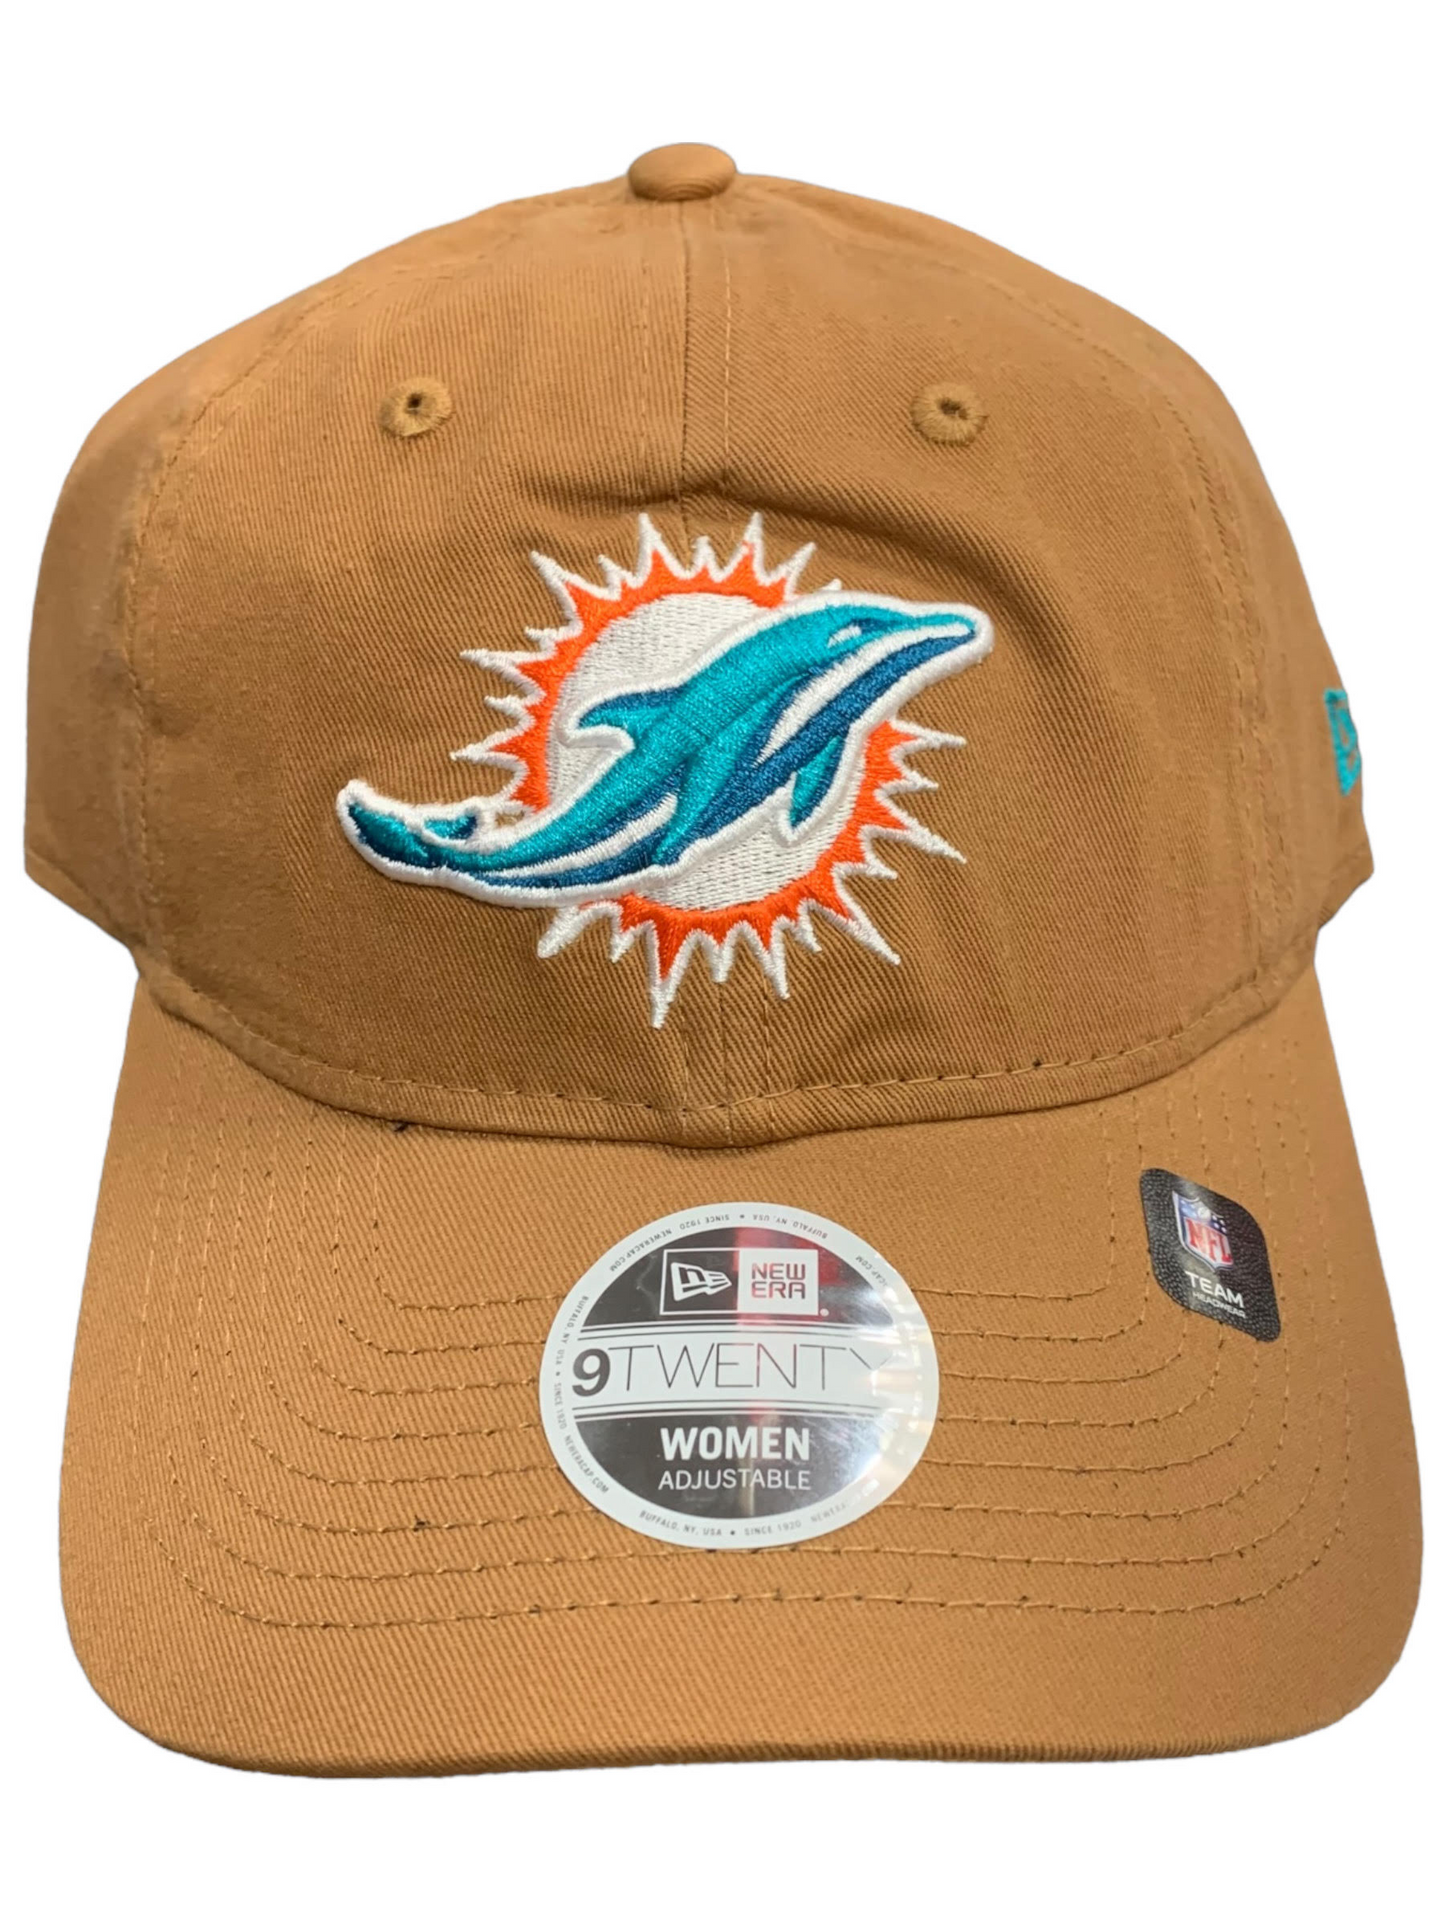 Miami Dolphins Women's Core Classic 9TWENTY Adjustable Hat - Tan